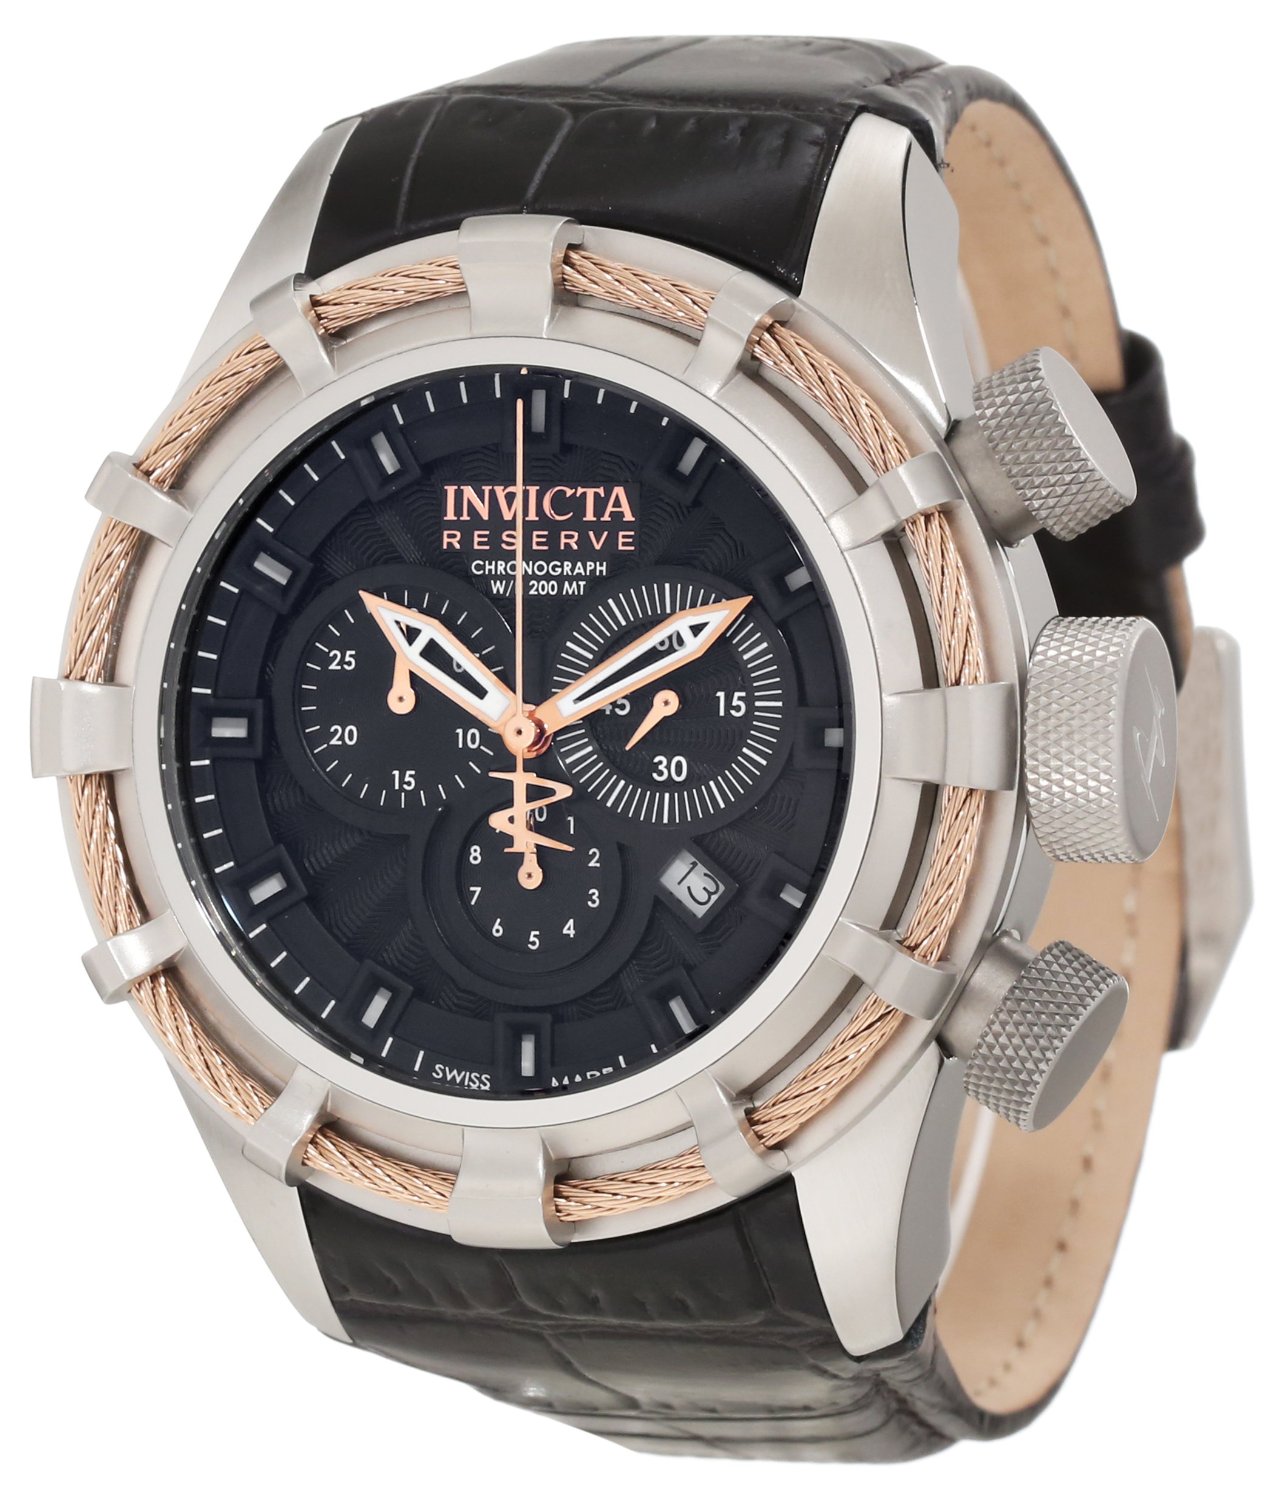 Invicta Men's 11041 Bolt Reserve Chronograph Black Textured Dial Watch  $309.99